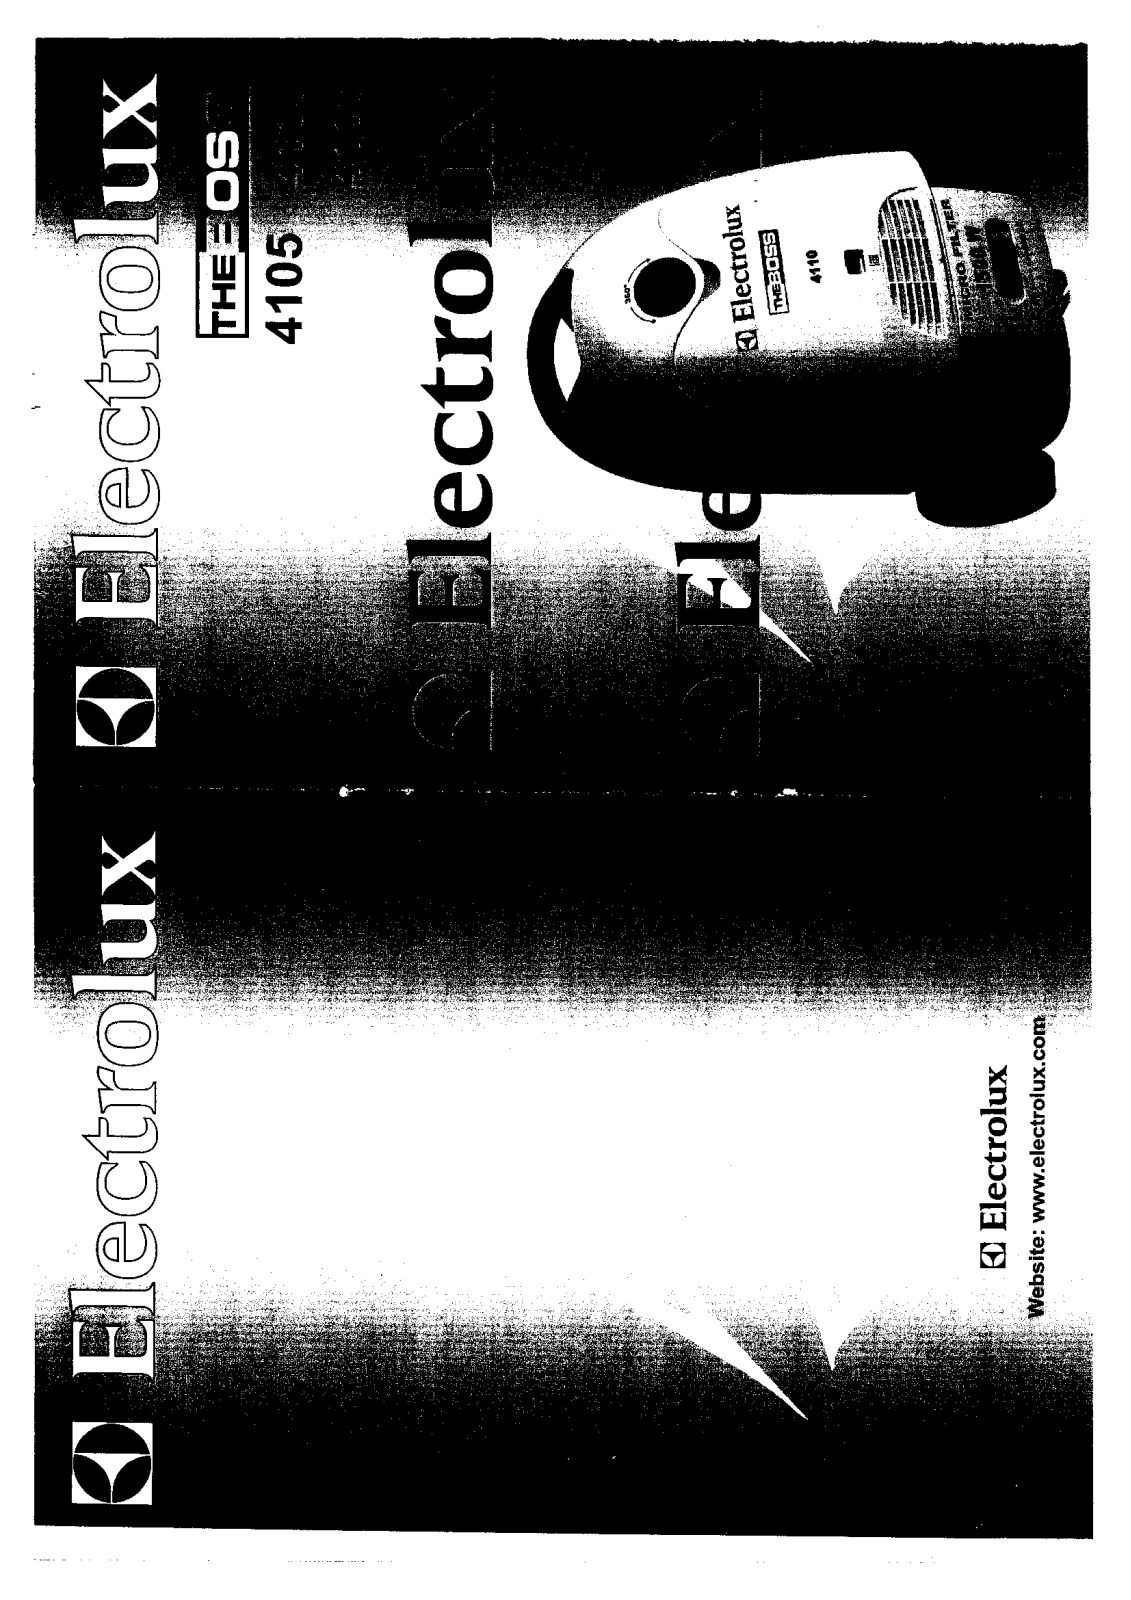 AEG-Electrolux 4105 User Manual